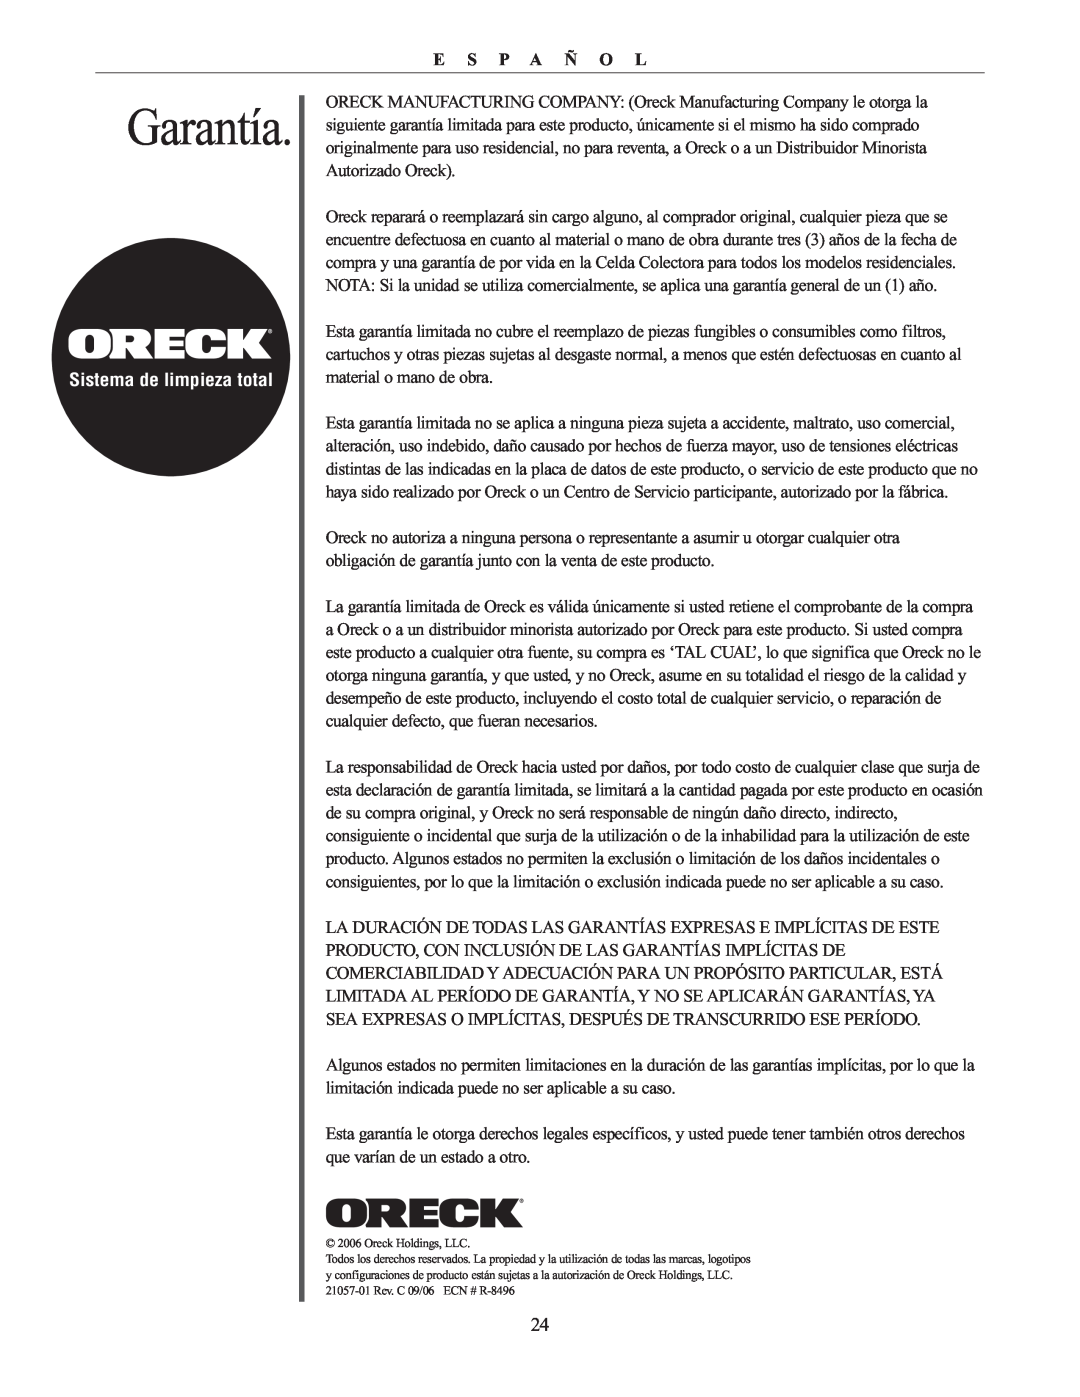 Oreck AIRP Series manual Garantía, Sistema de limpieza total, Oreck Holdings, LLC 